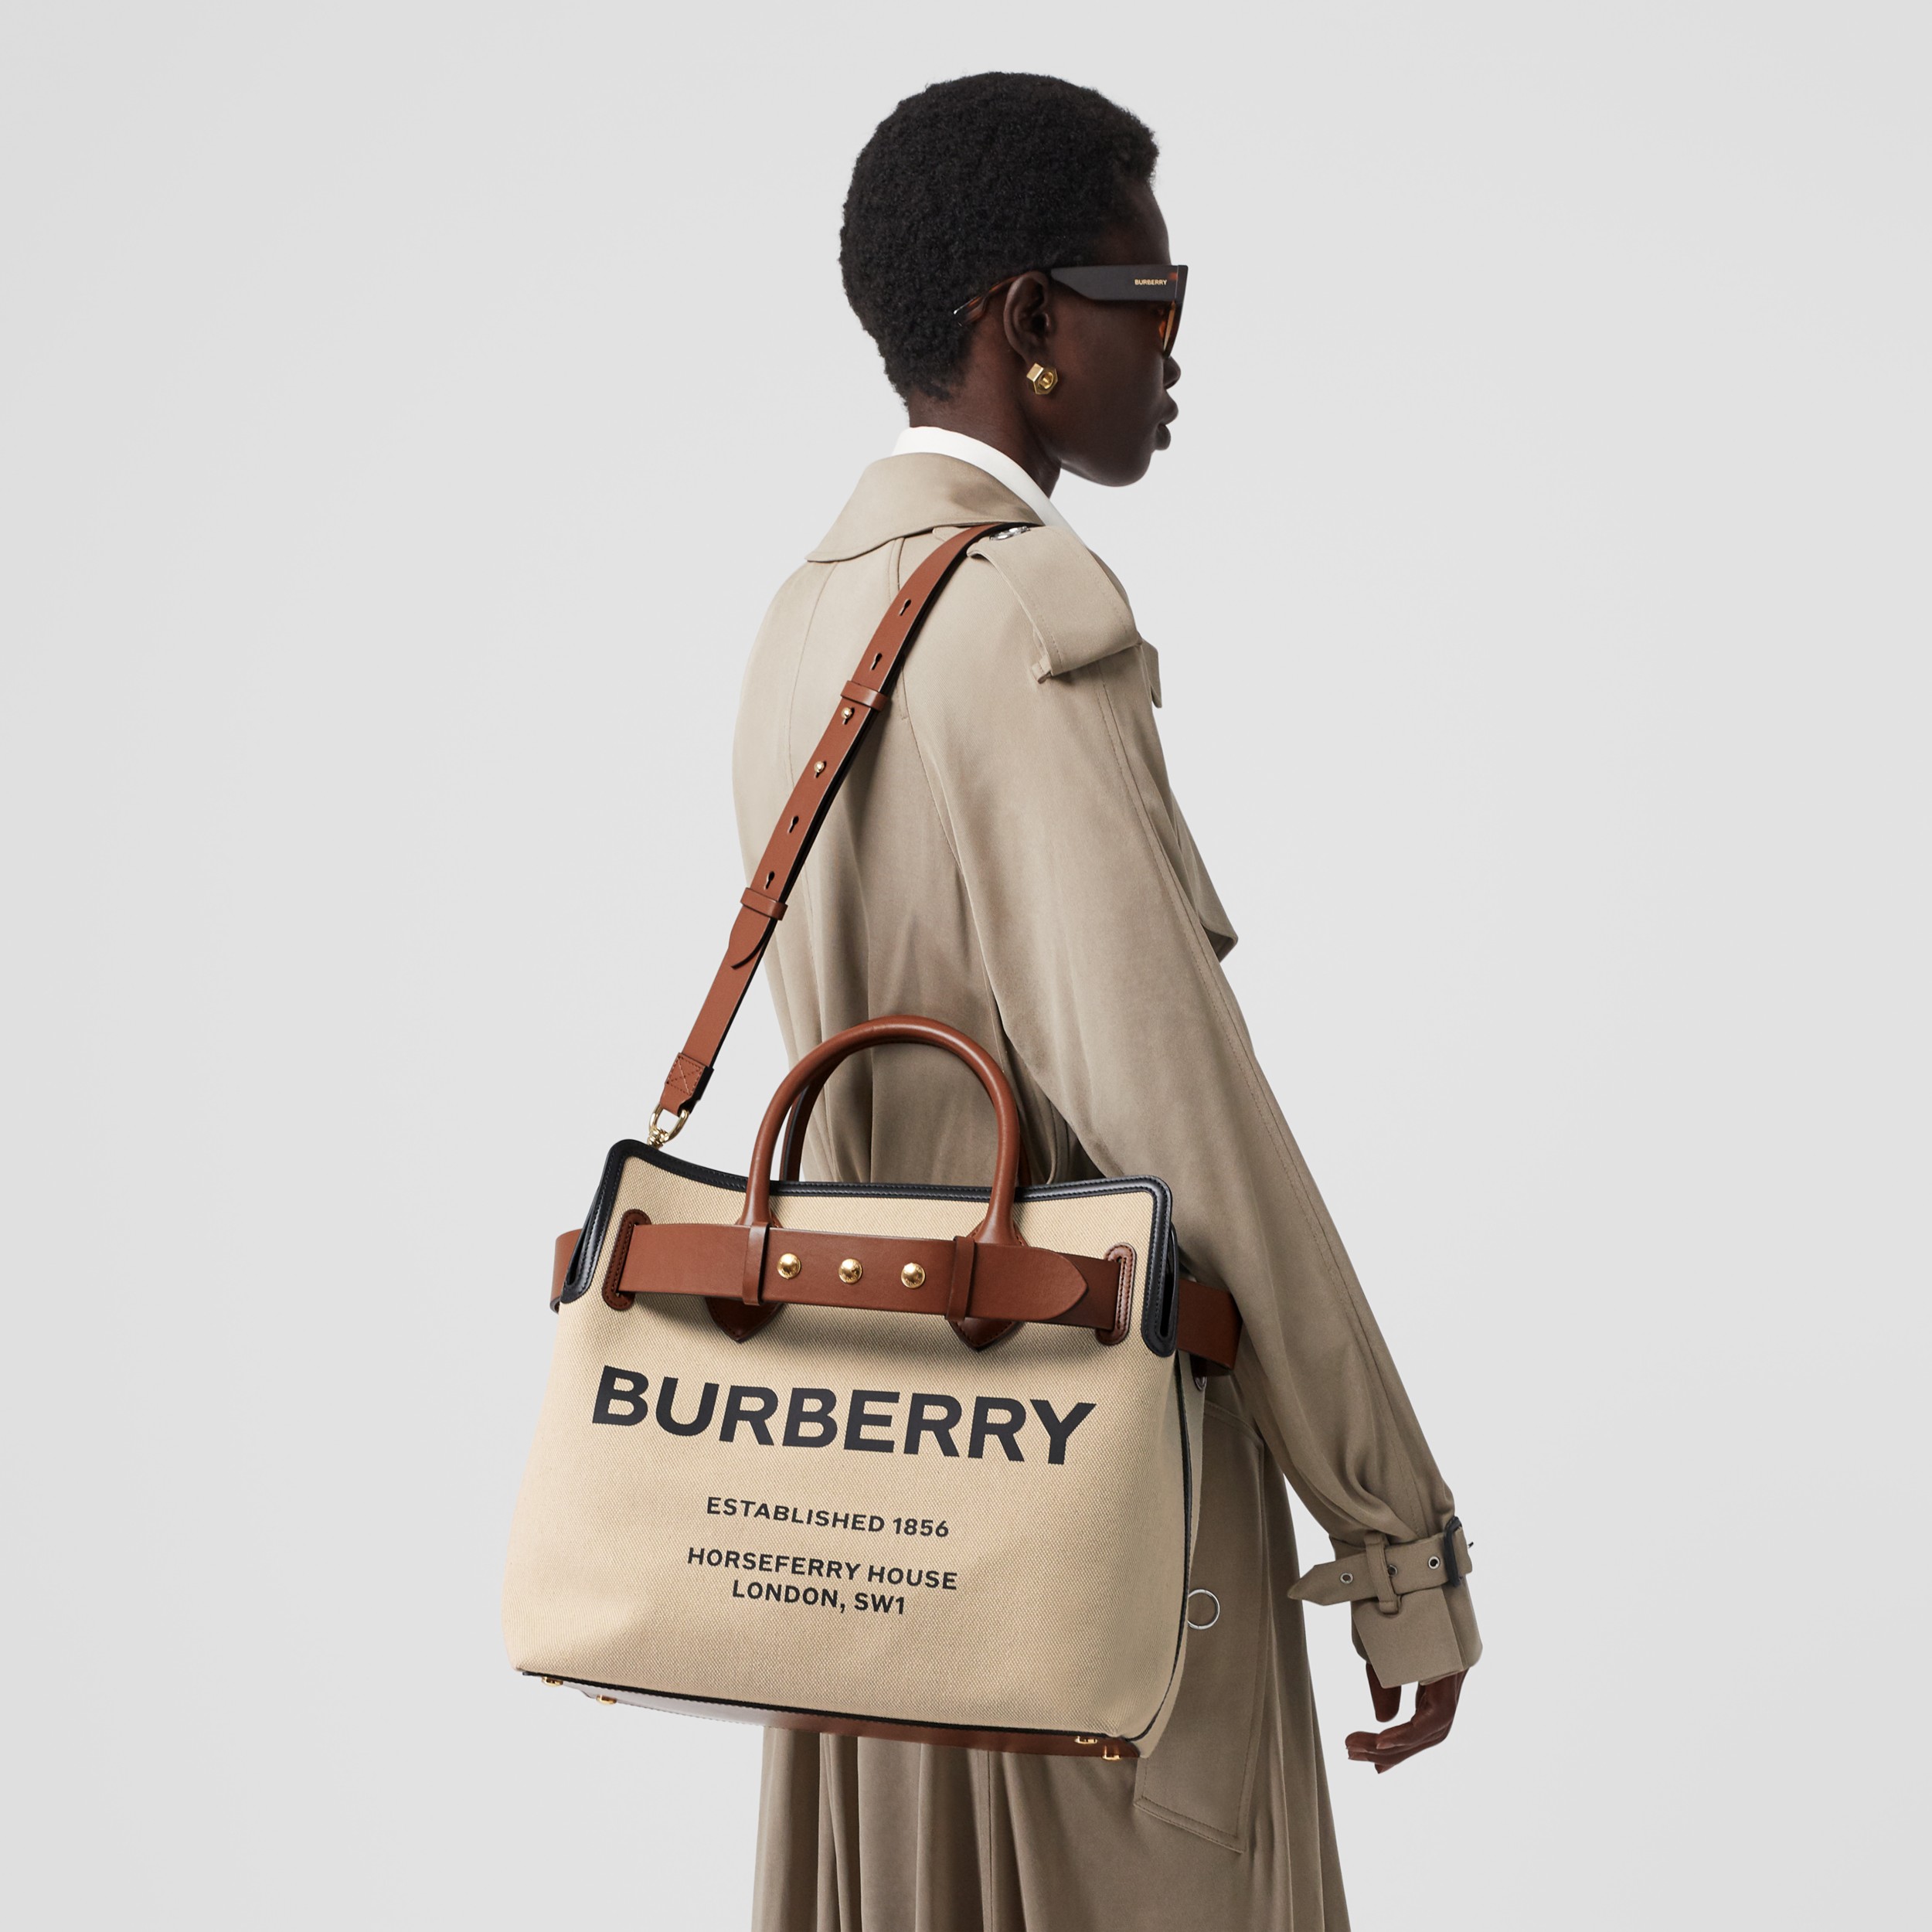 Burberry Latest Handbags